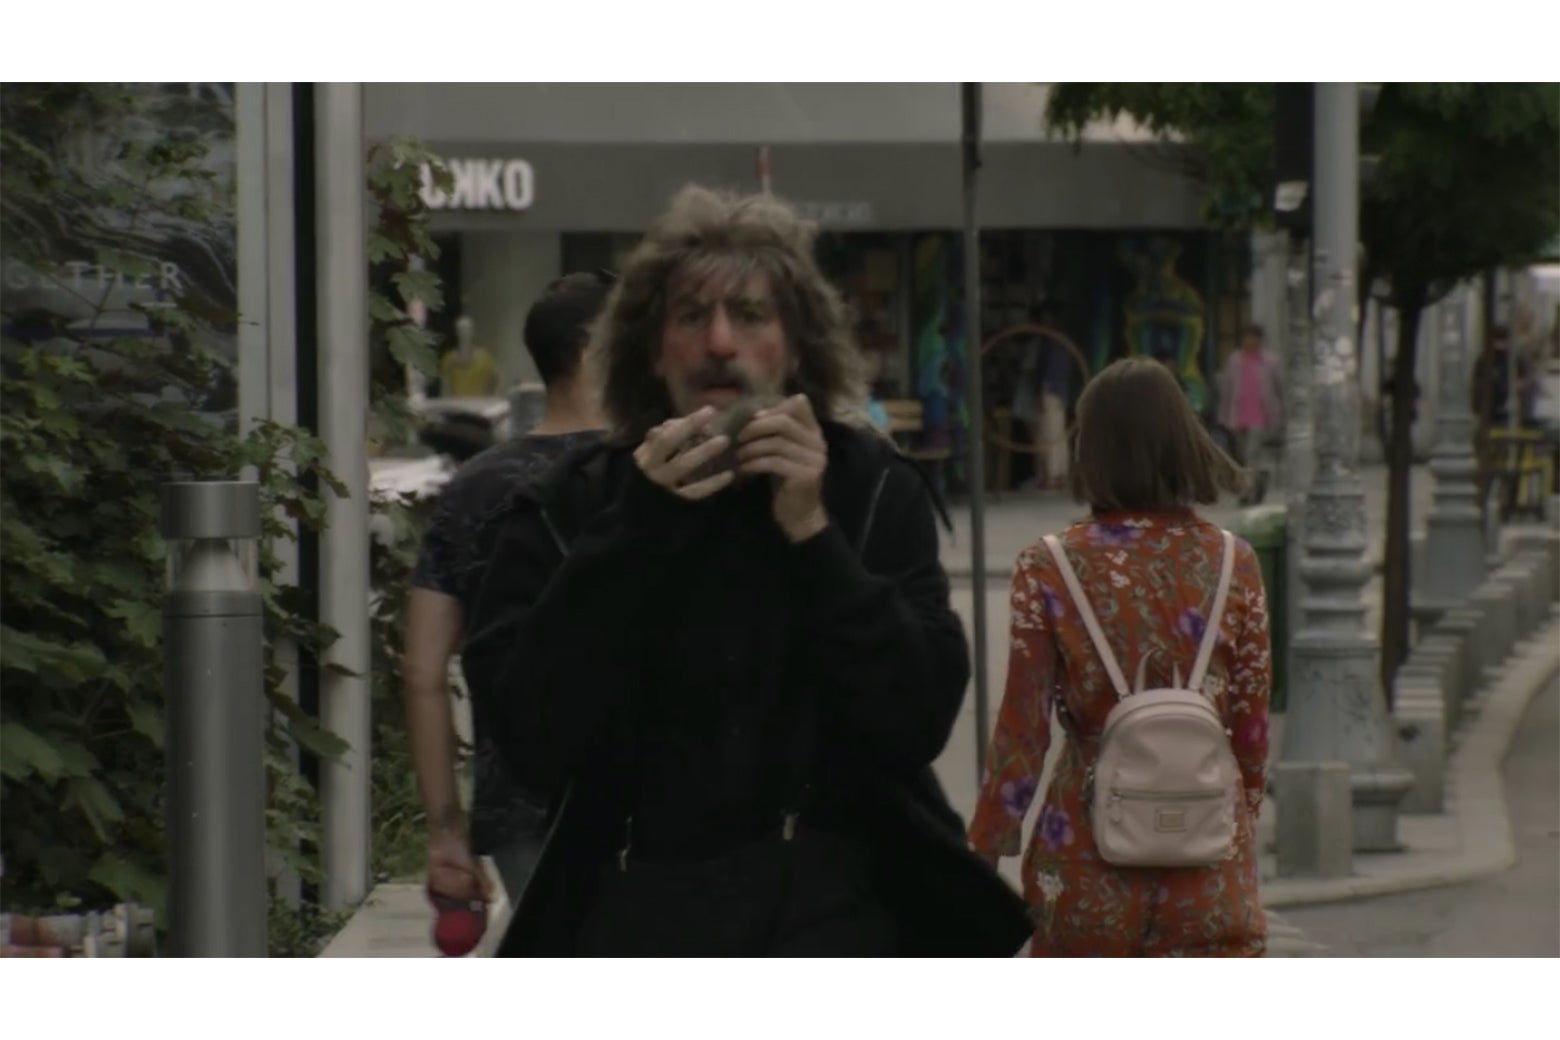 A still from Borat showing Borat walking toward camera on a city street, in front of a Yokko shop.